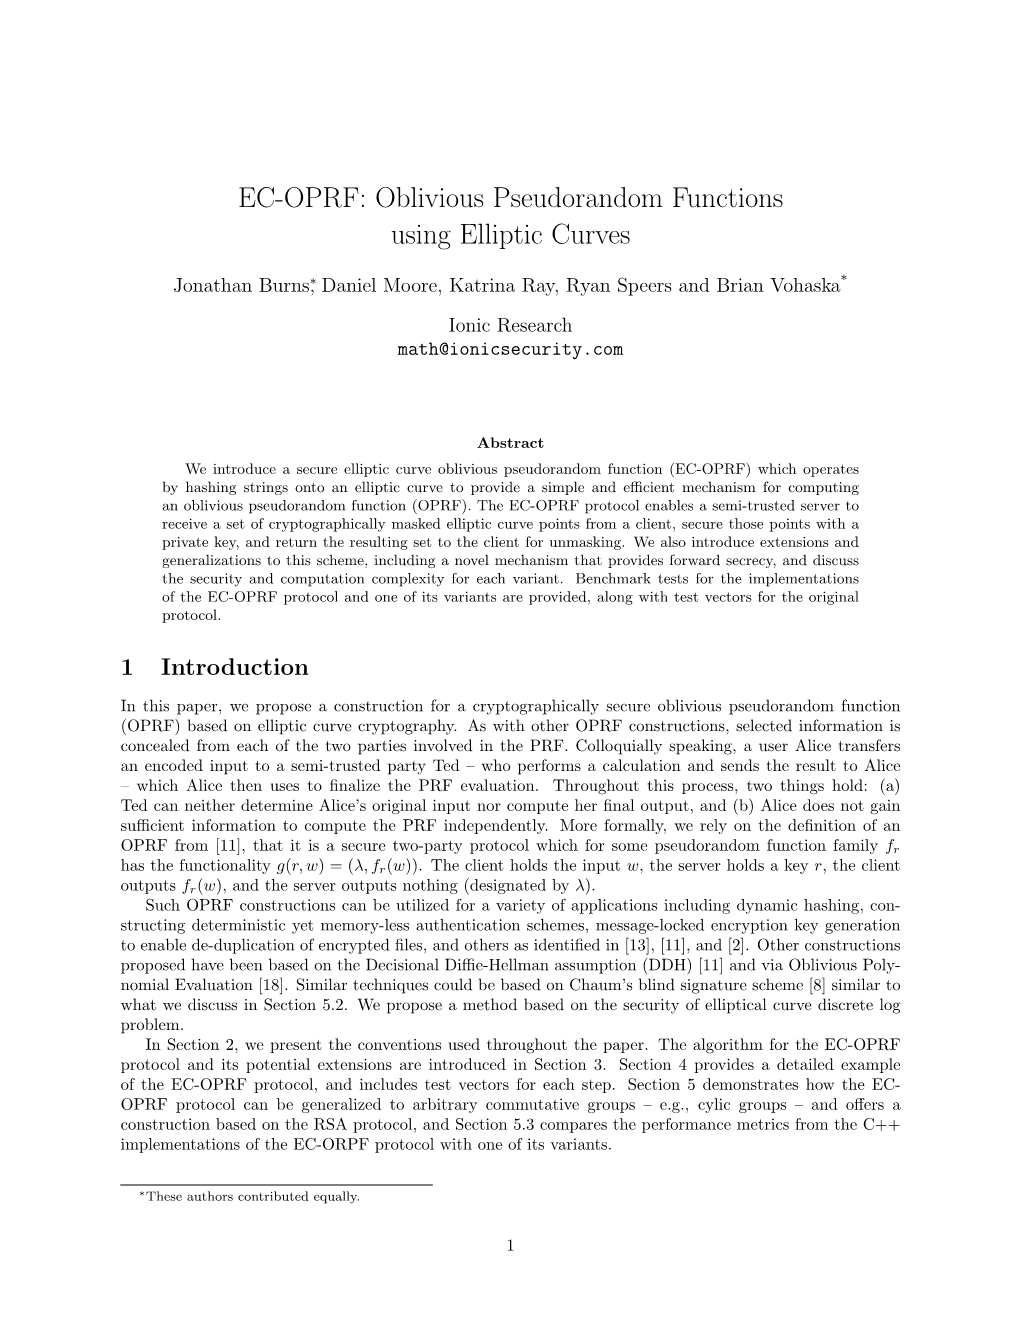 EC-OPRF: Oblivious Pseudorandom Functions Using Elliptic Curves